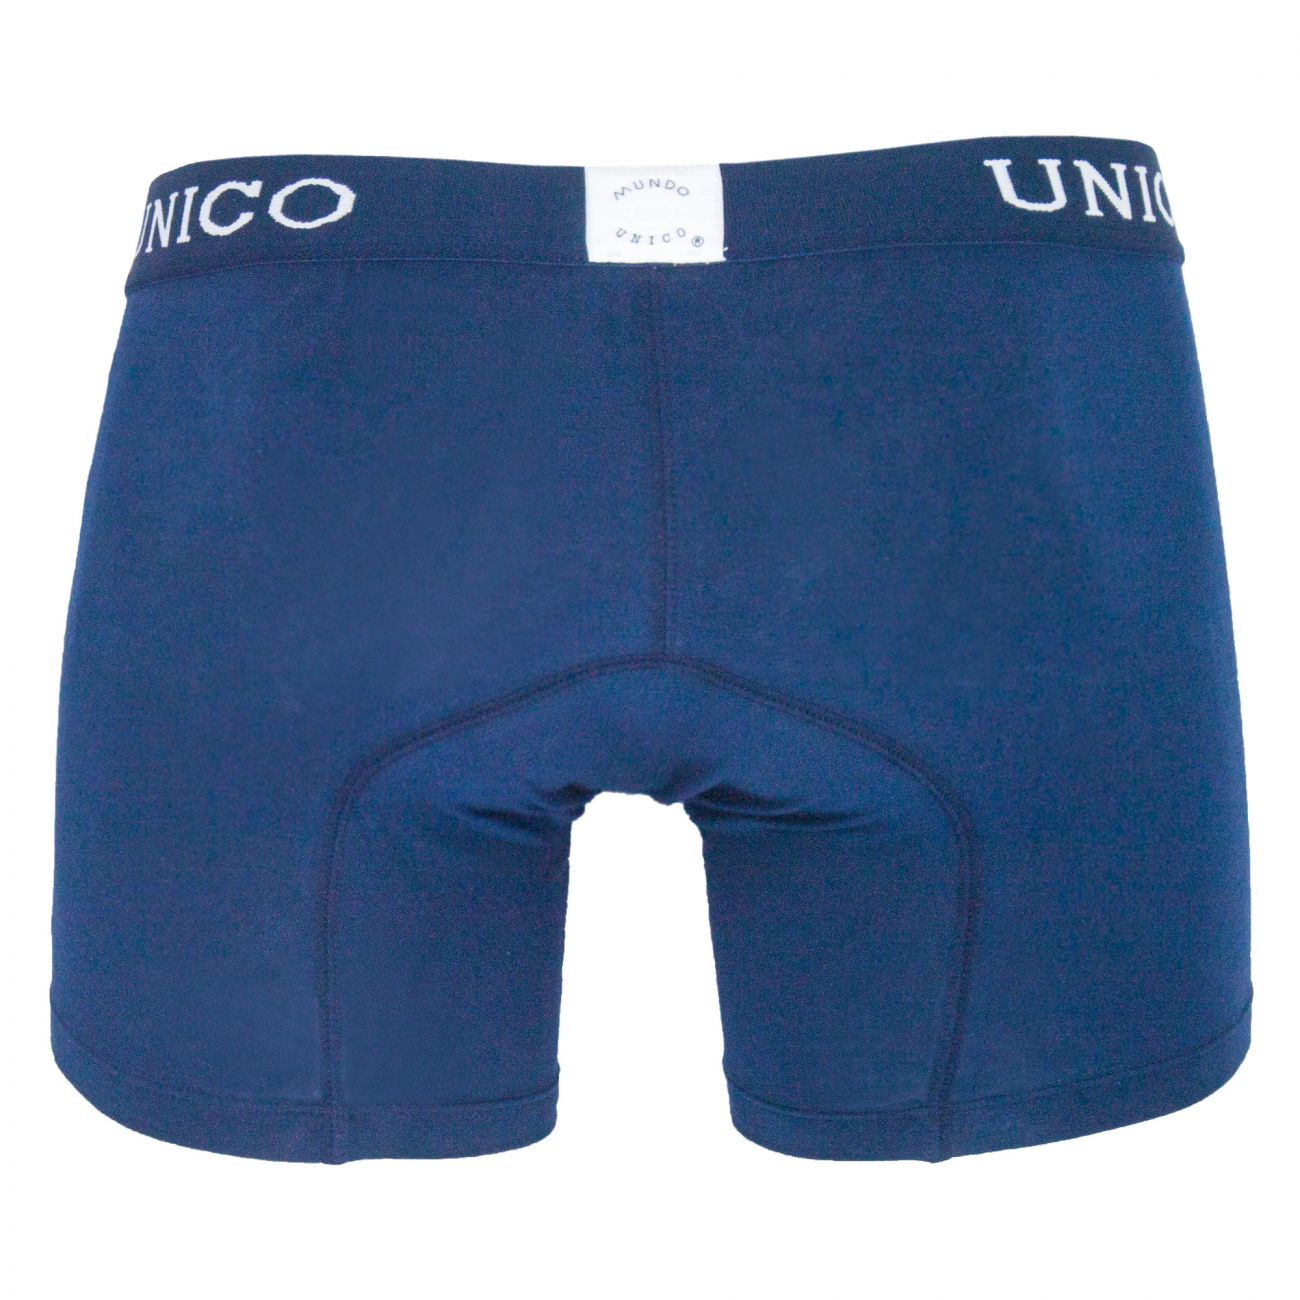 Mens Underwear: Unico 9610090182 Boxer Briefs Profundo | eBay